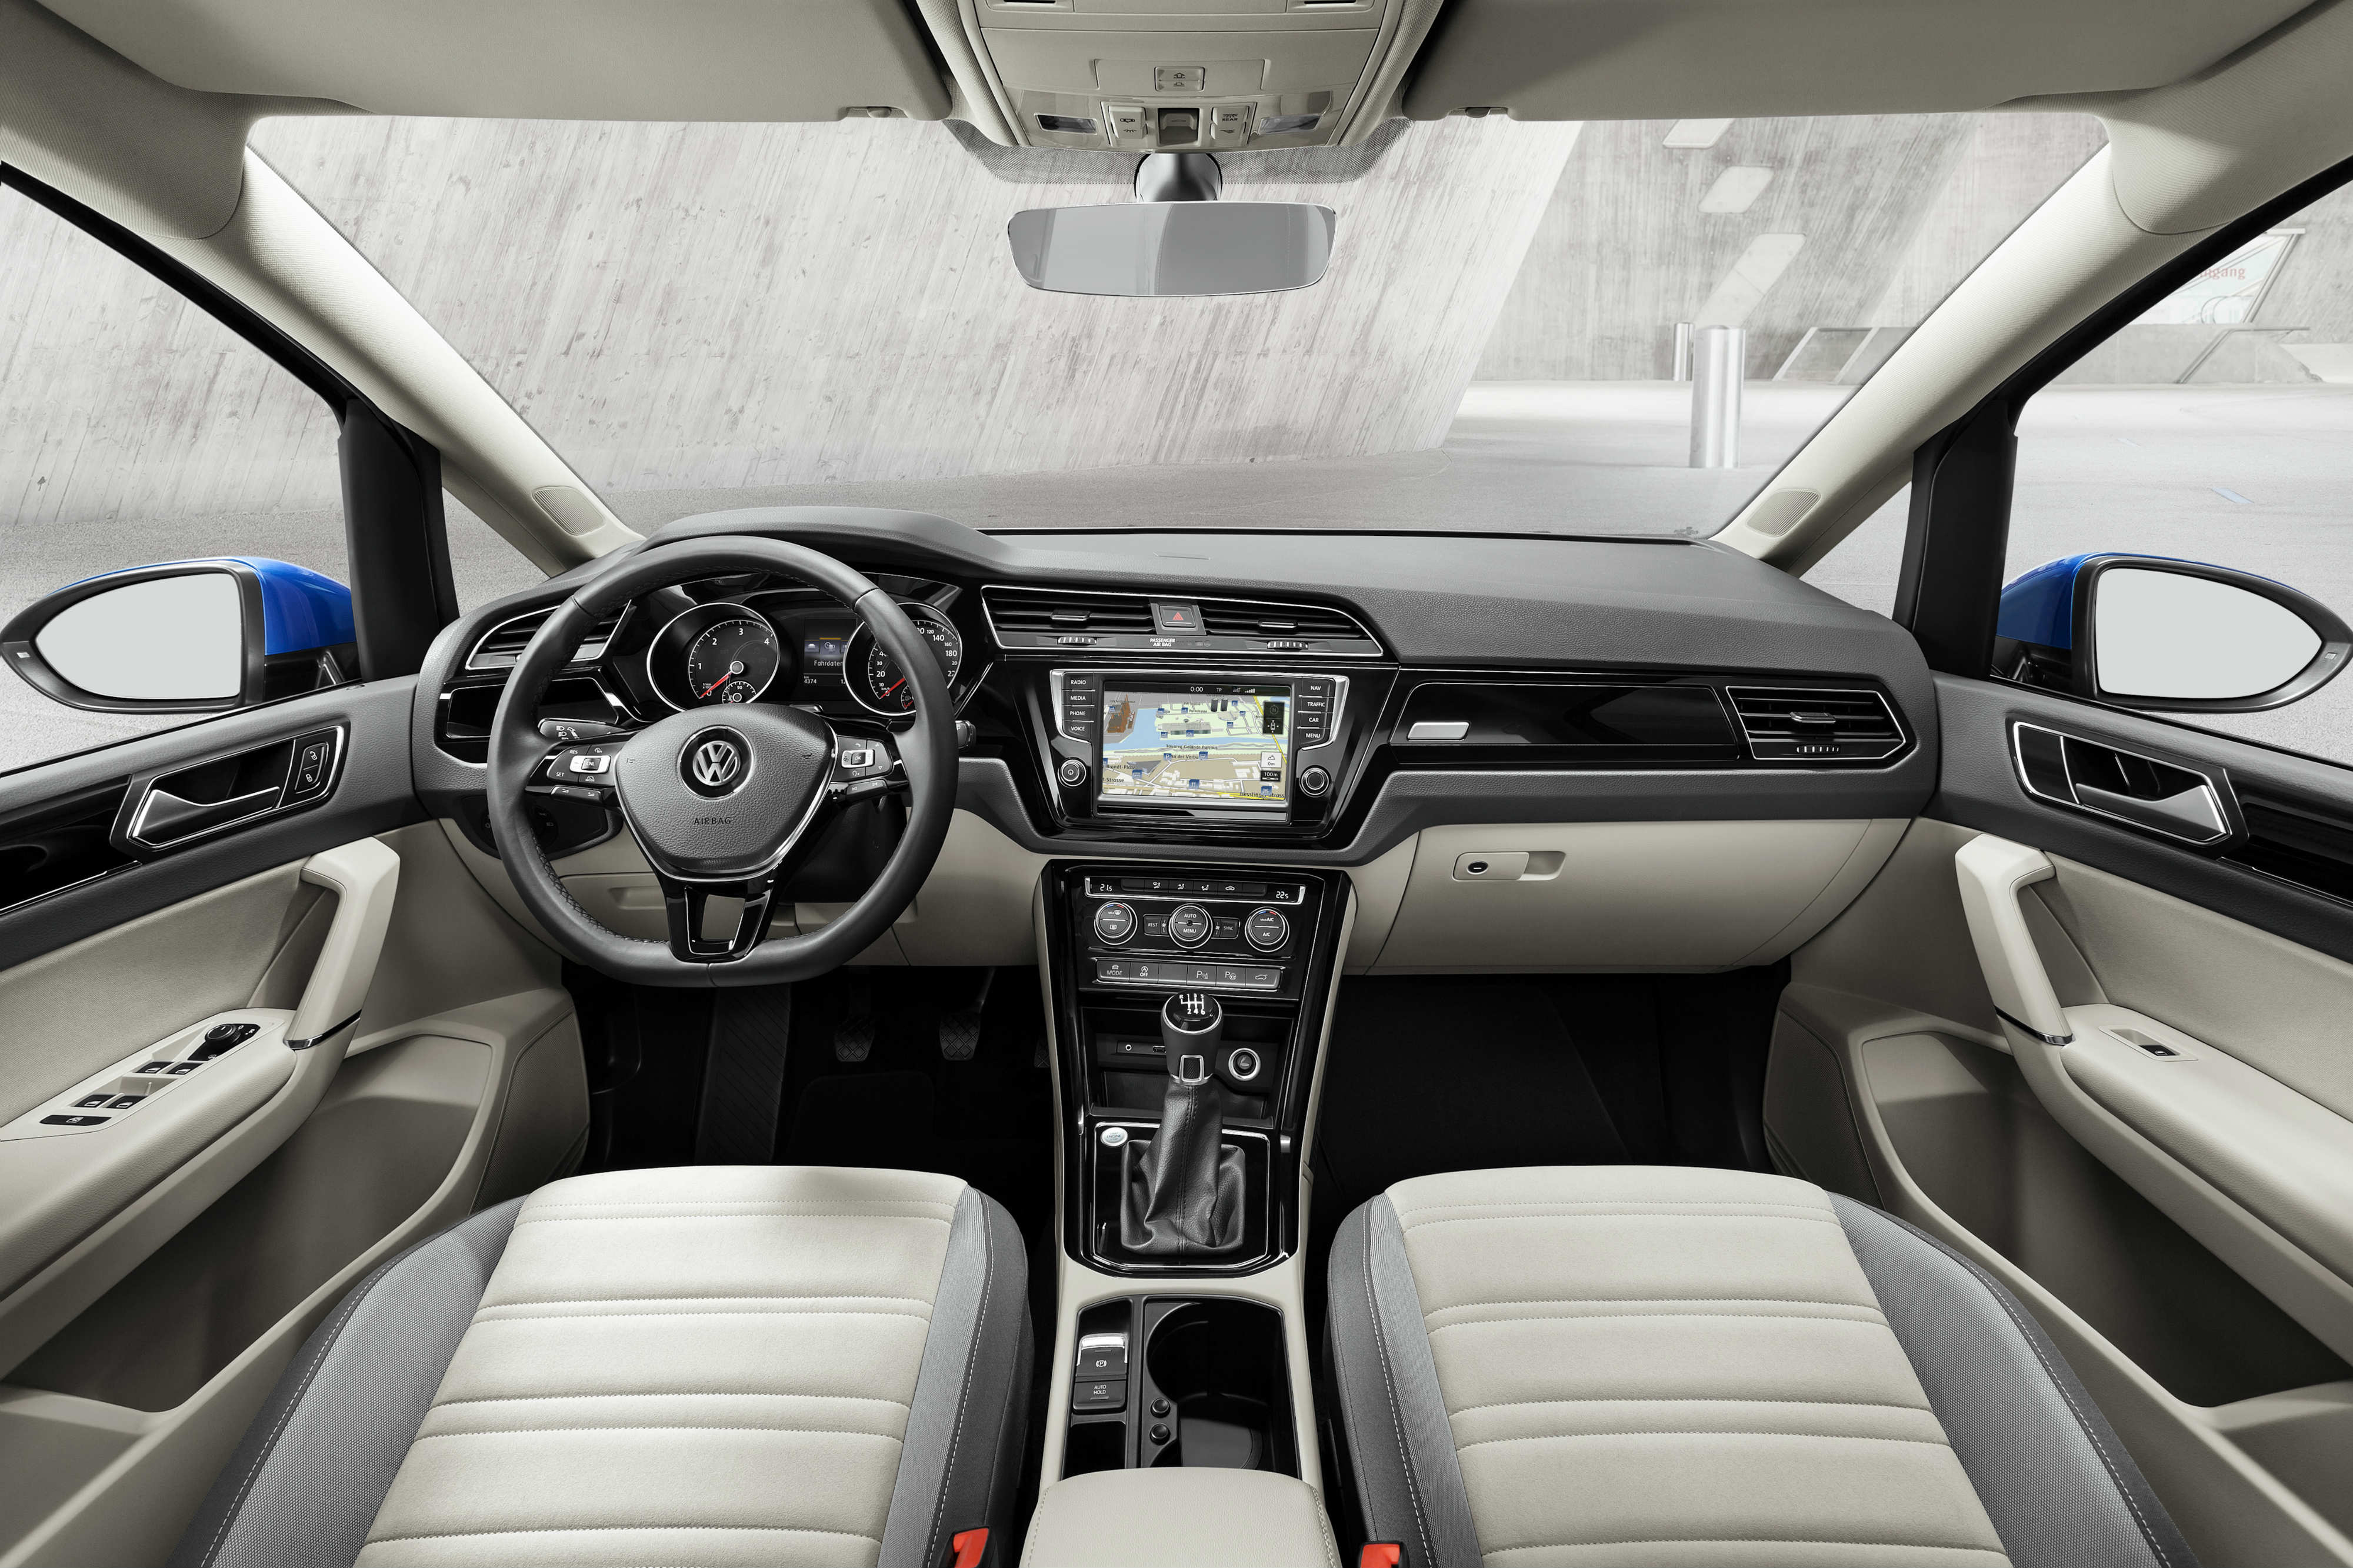 Volkswagen Touran MPV 2015